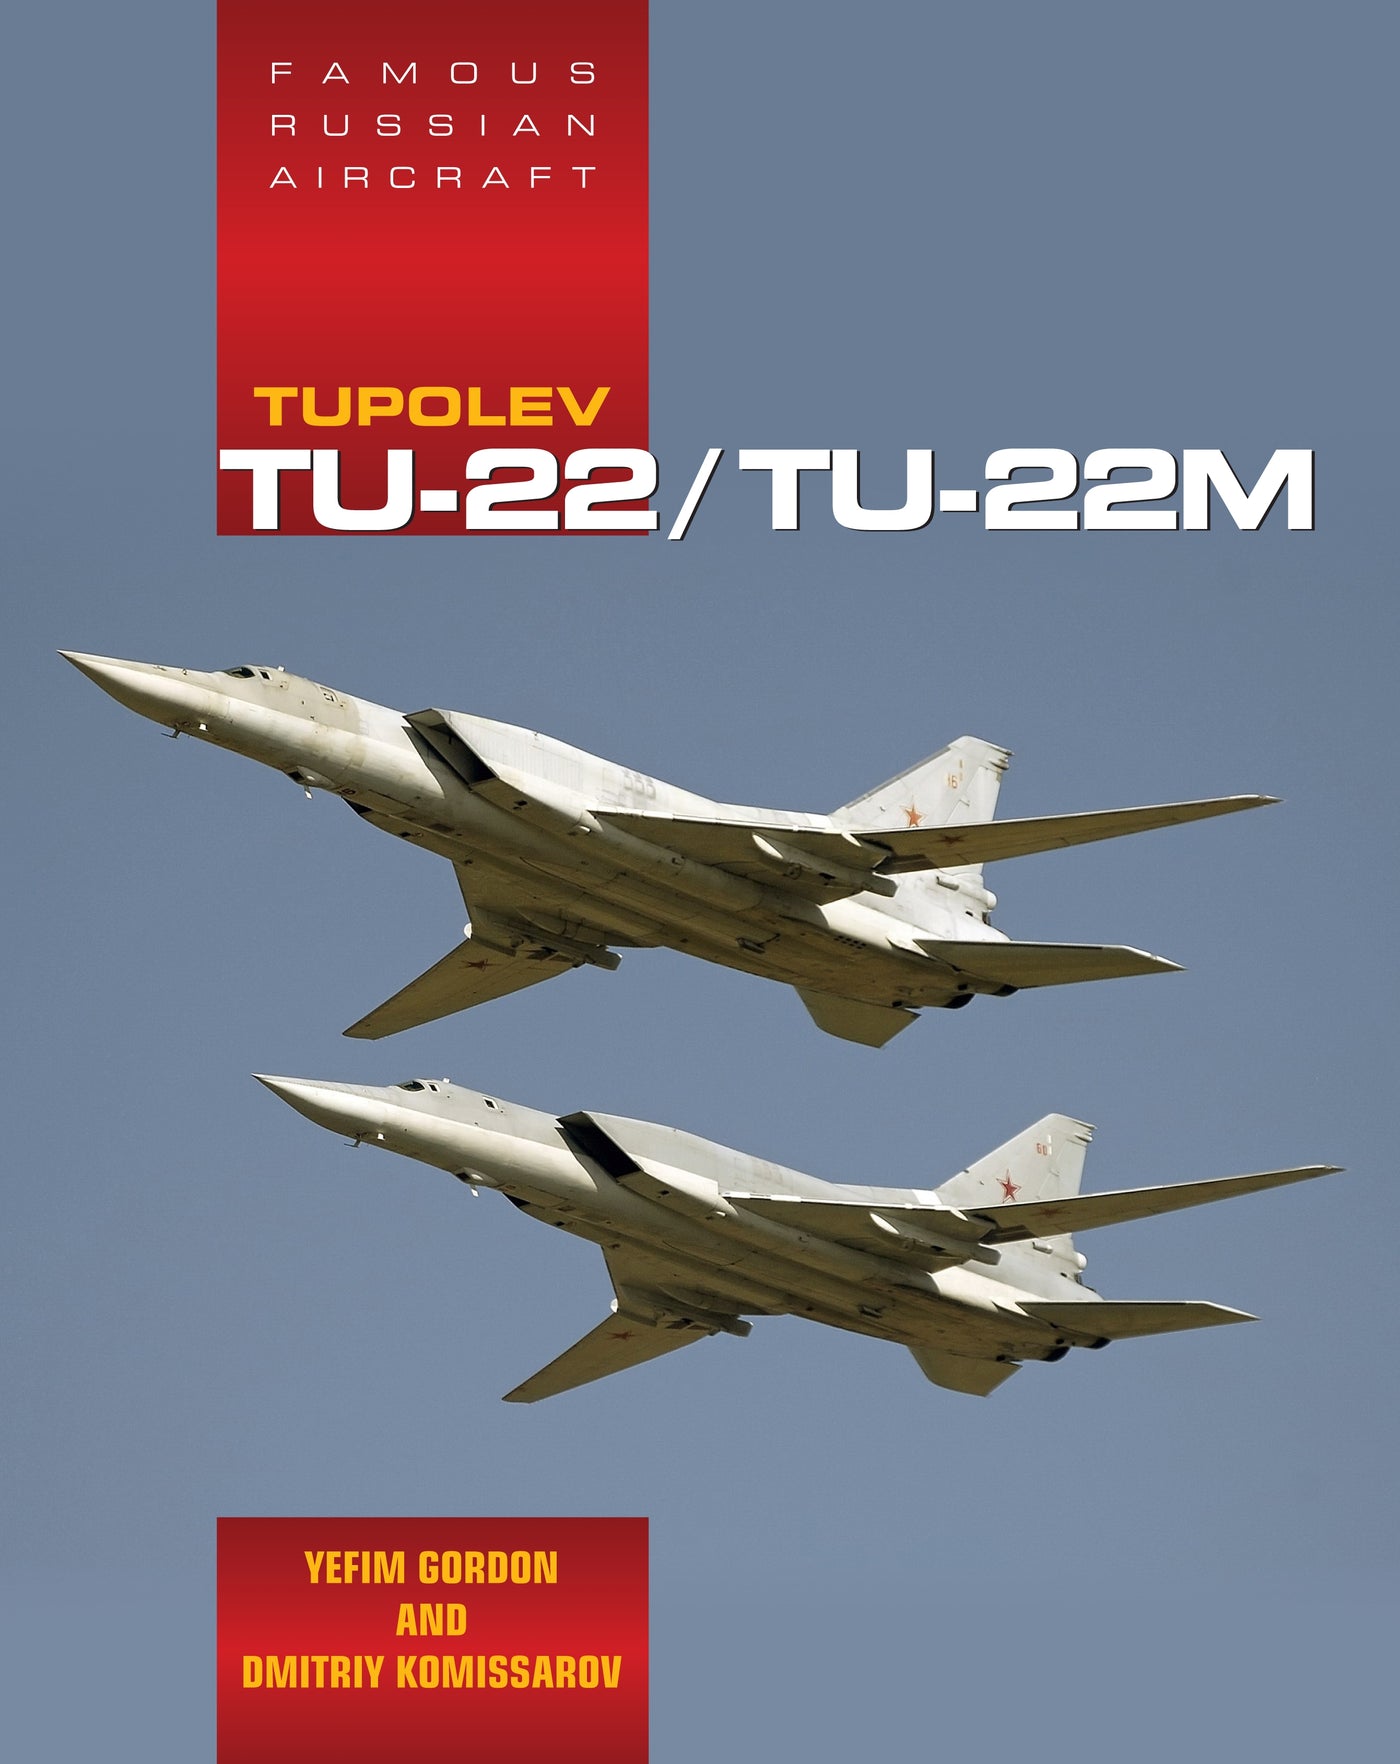 Famous Russian Aircraft:Tupolev Tu-22/Tu-22m